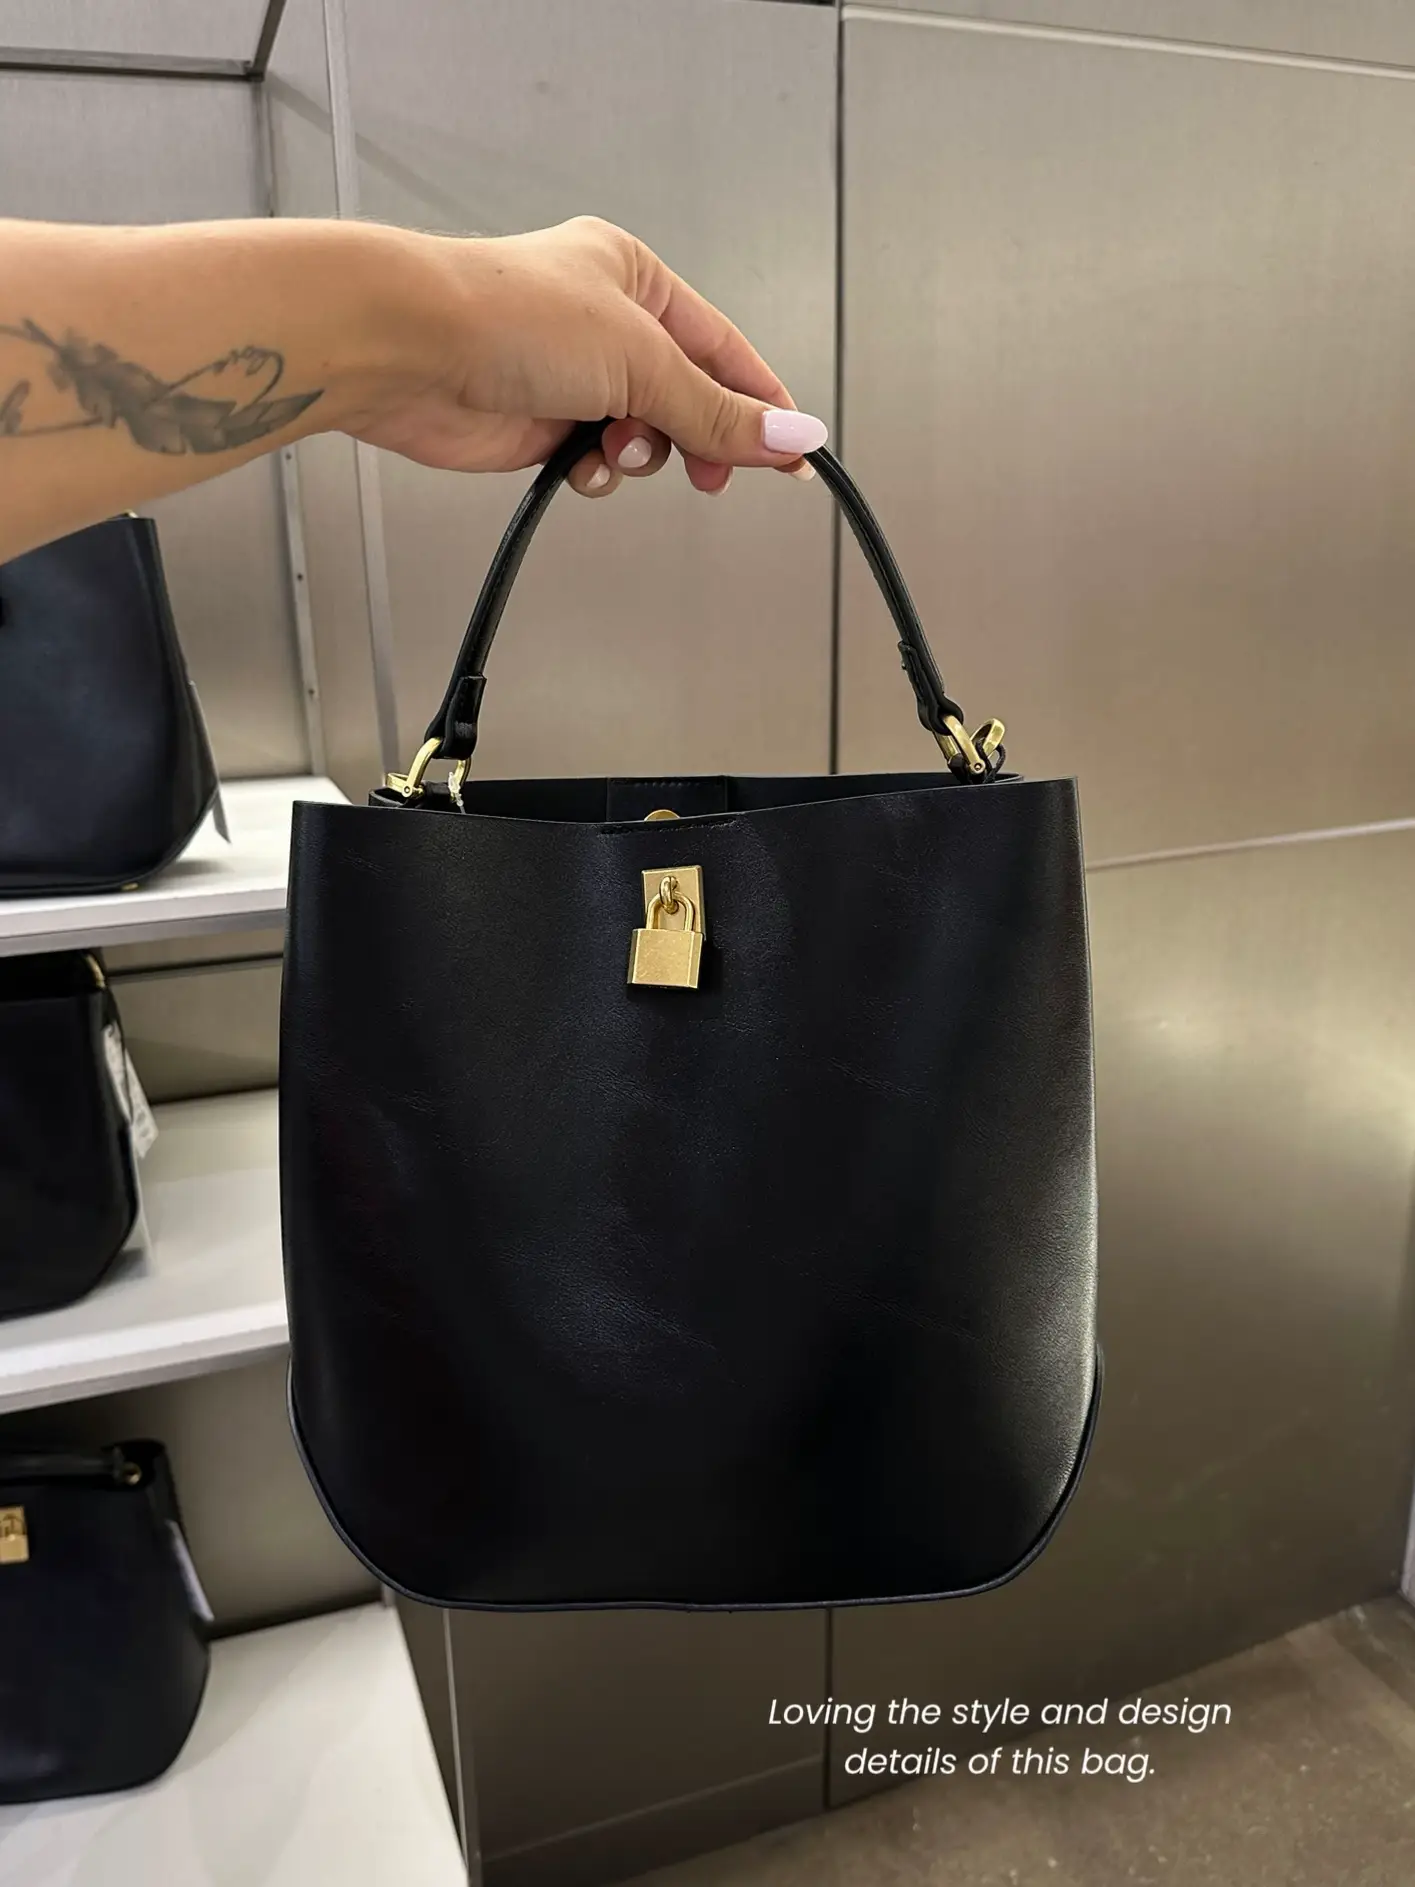 Mango's 'stunning' £36 handbag looks just like Prada's £1,900